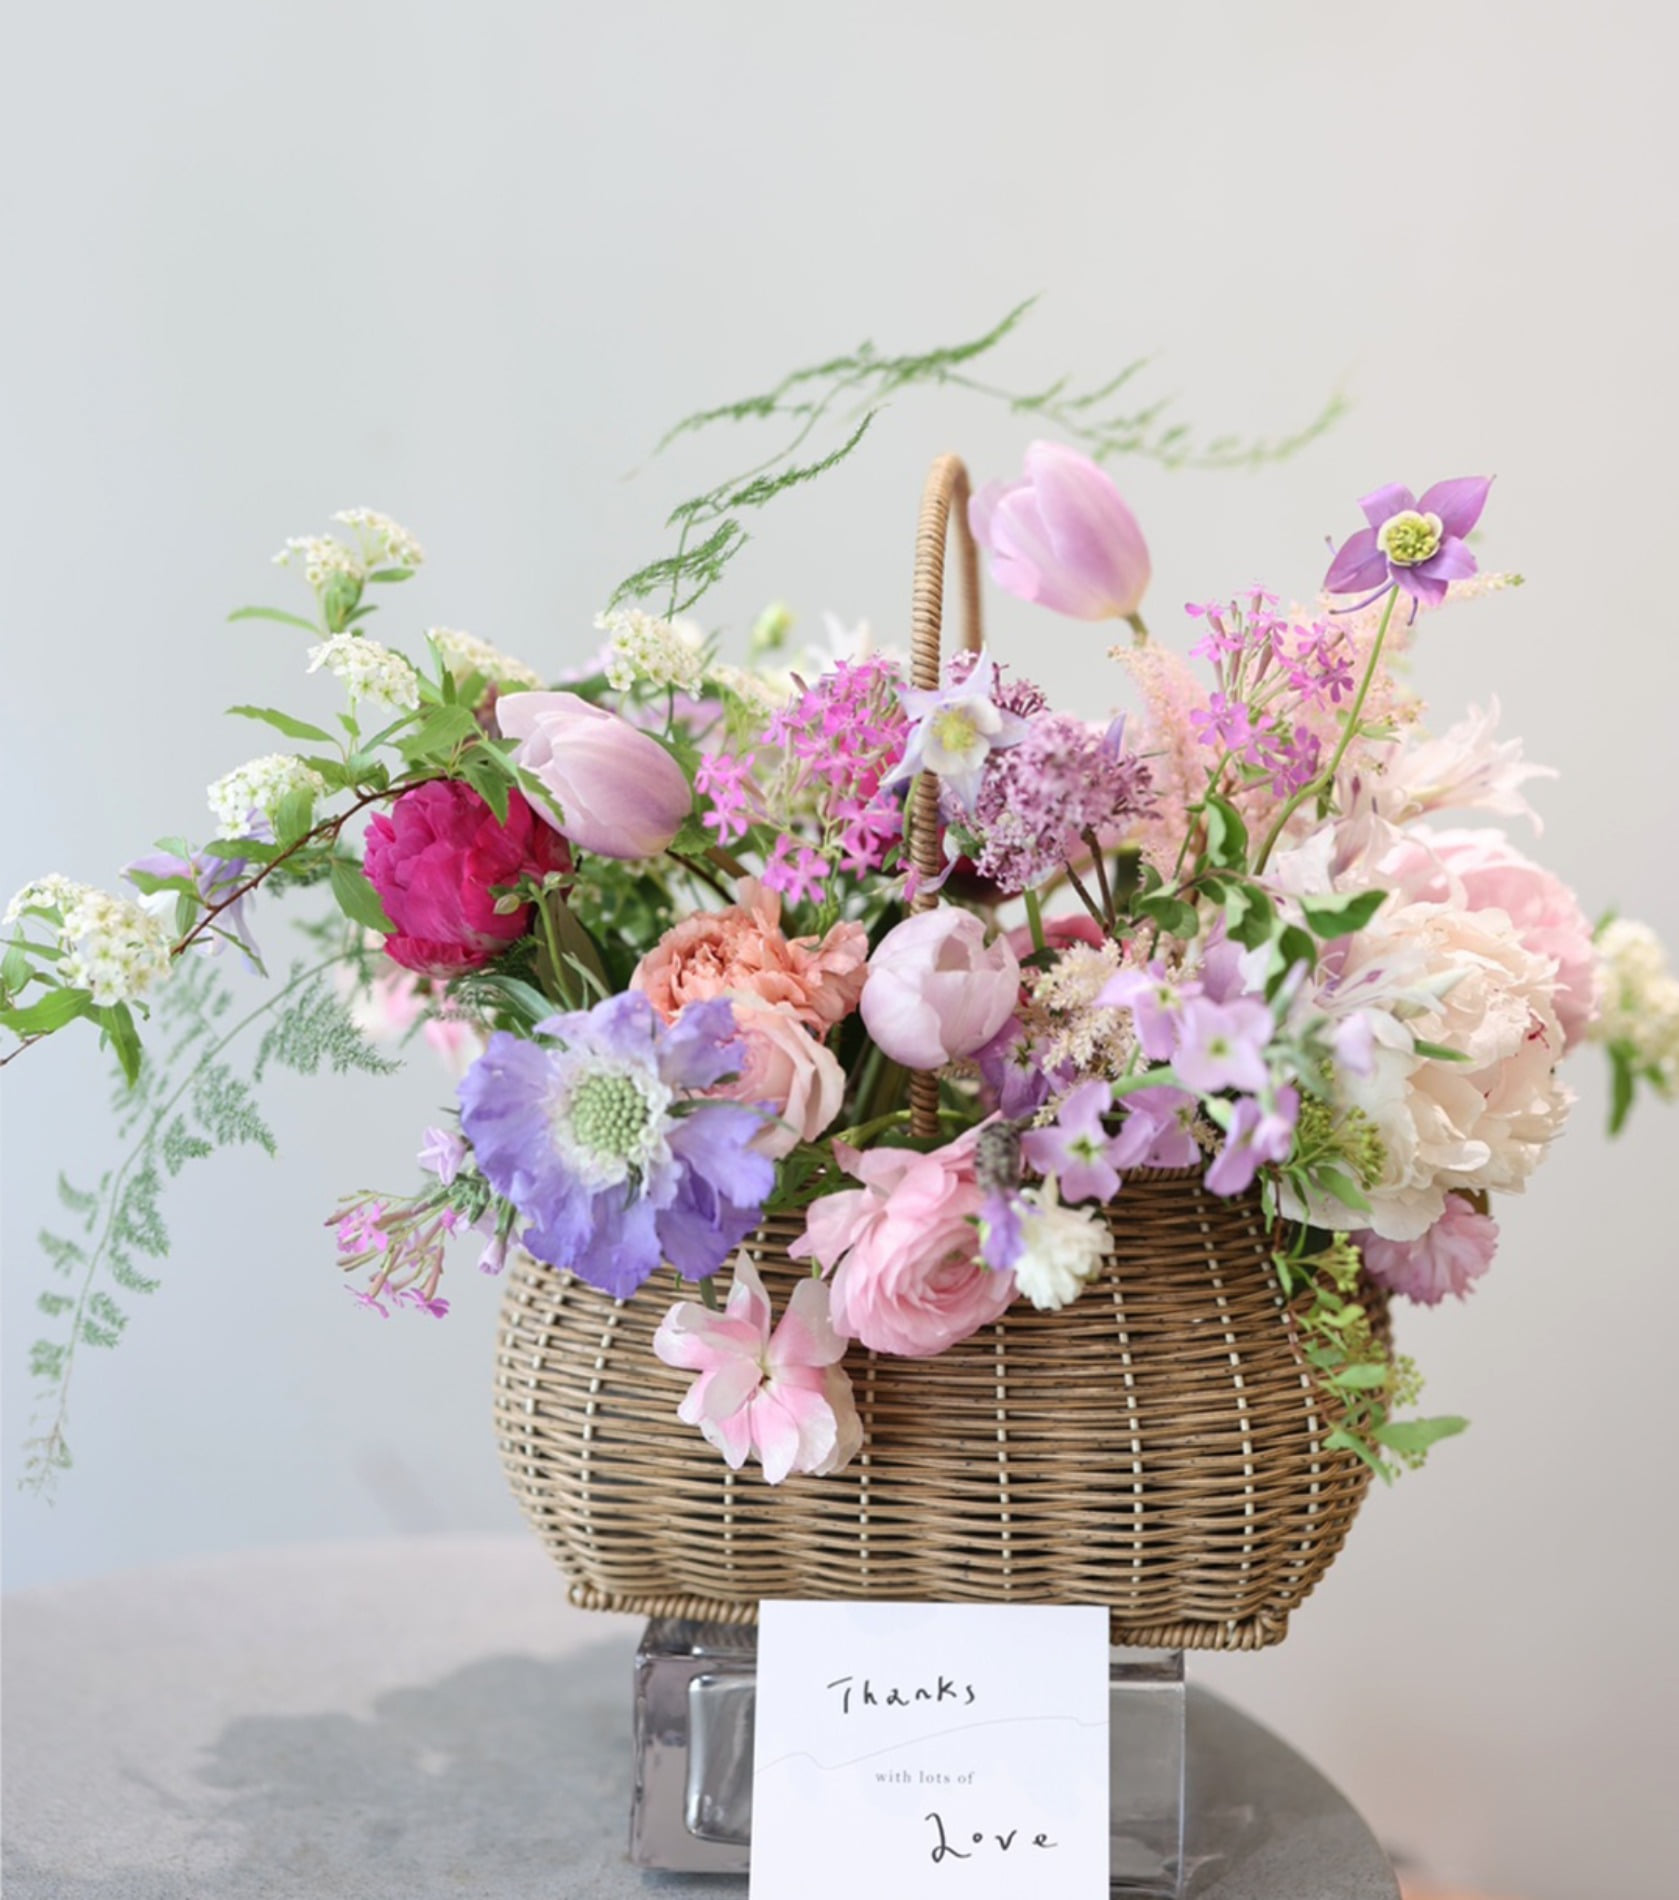 Thanks love flower basket_big size